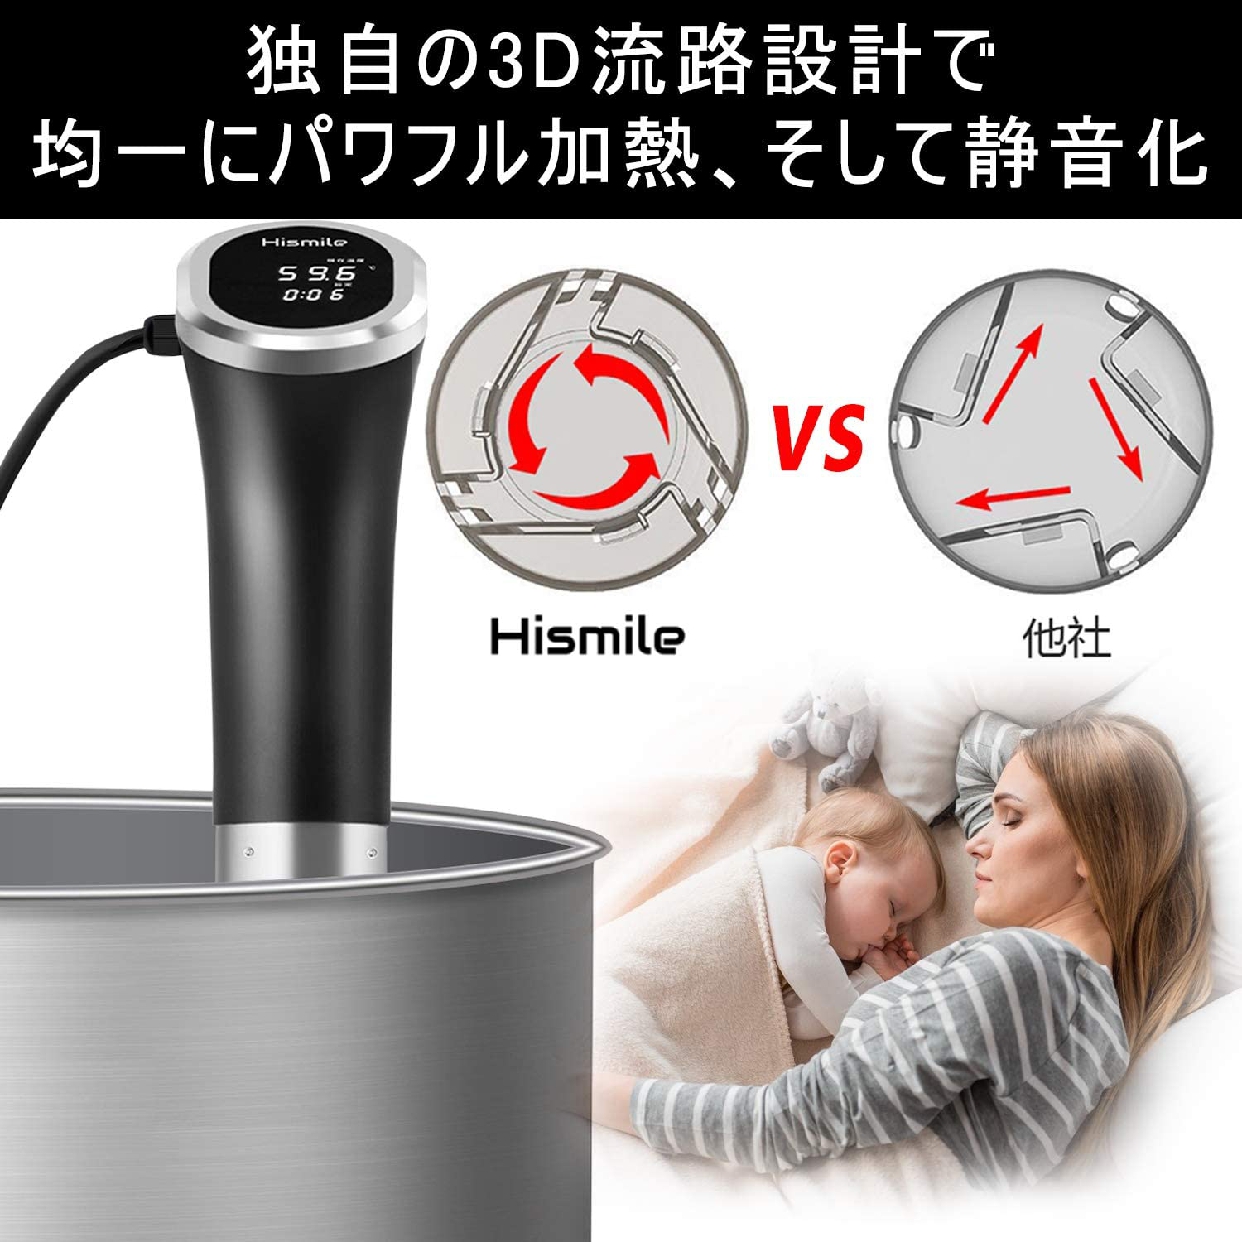 Hismile(ハイスマイル) 低温調理器 HS-SV6Bの商品画像サムネ4 